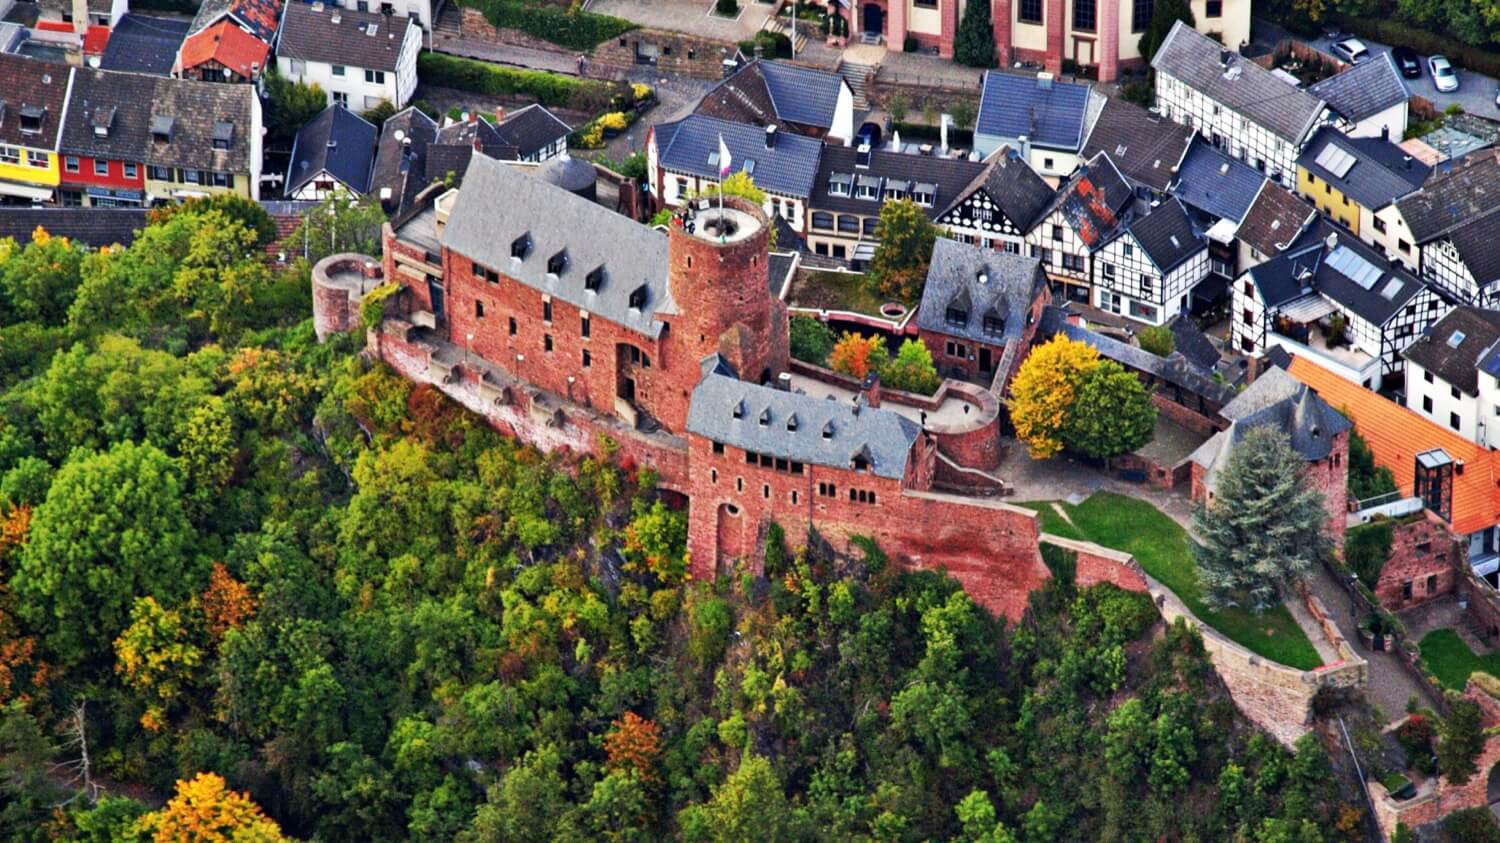 Burg Hengebach